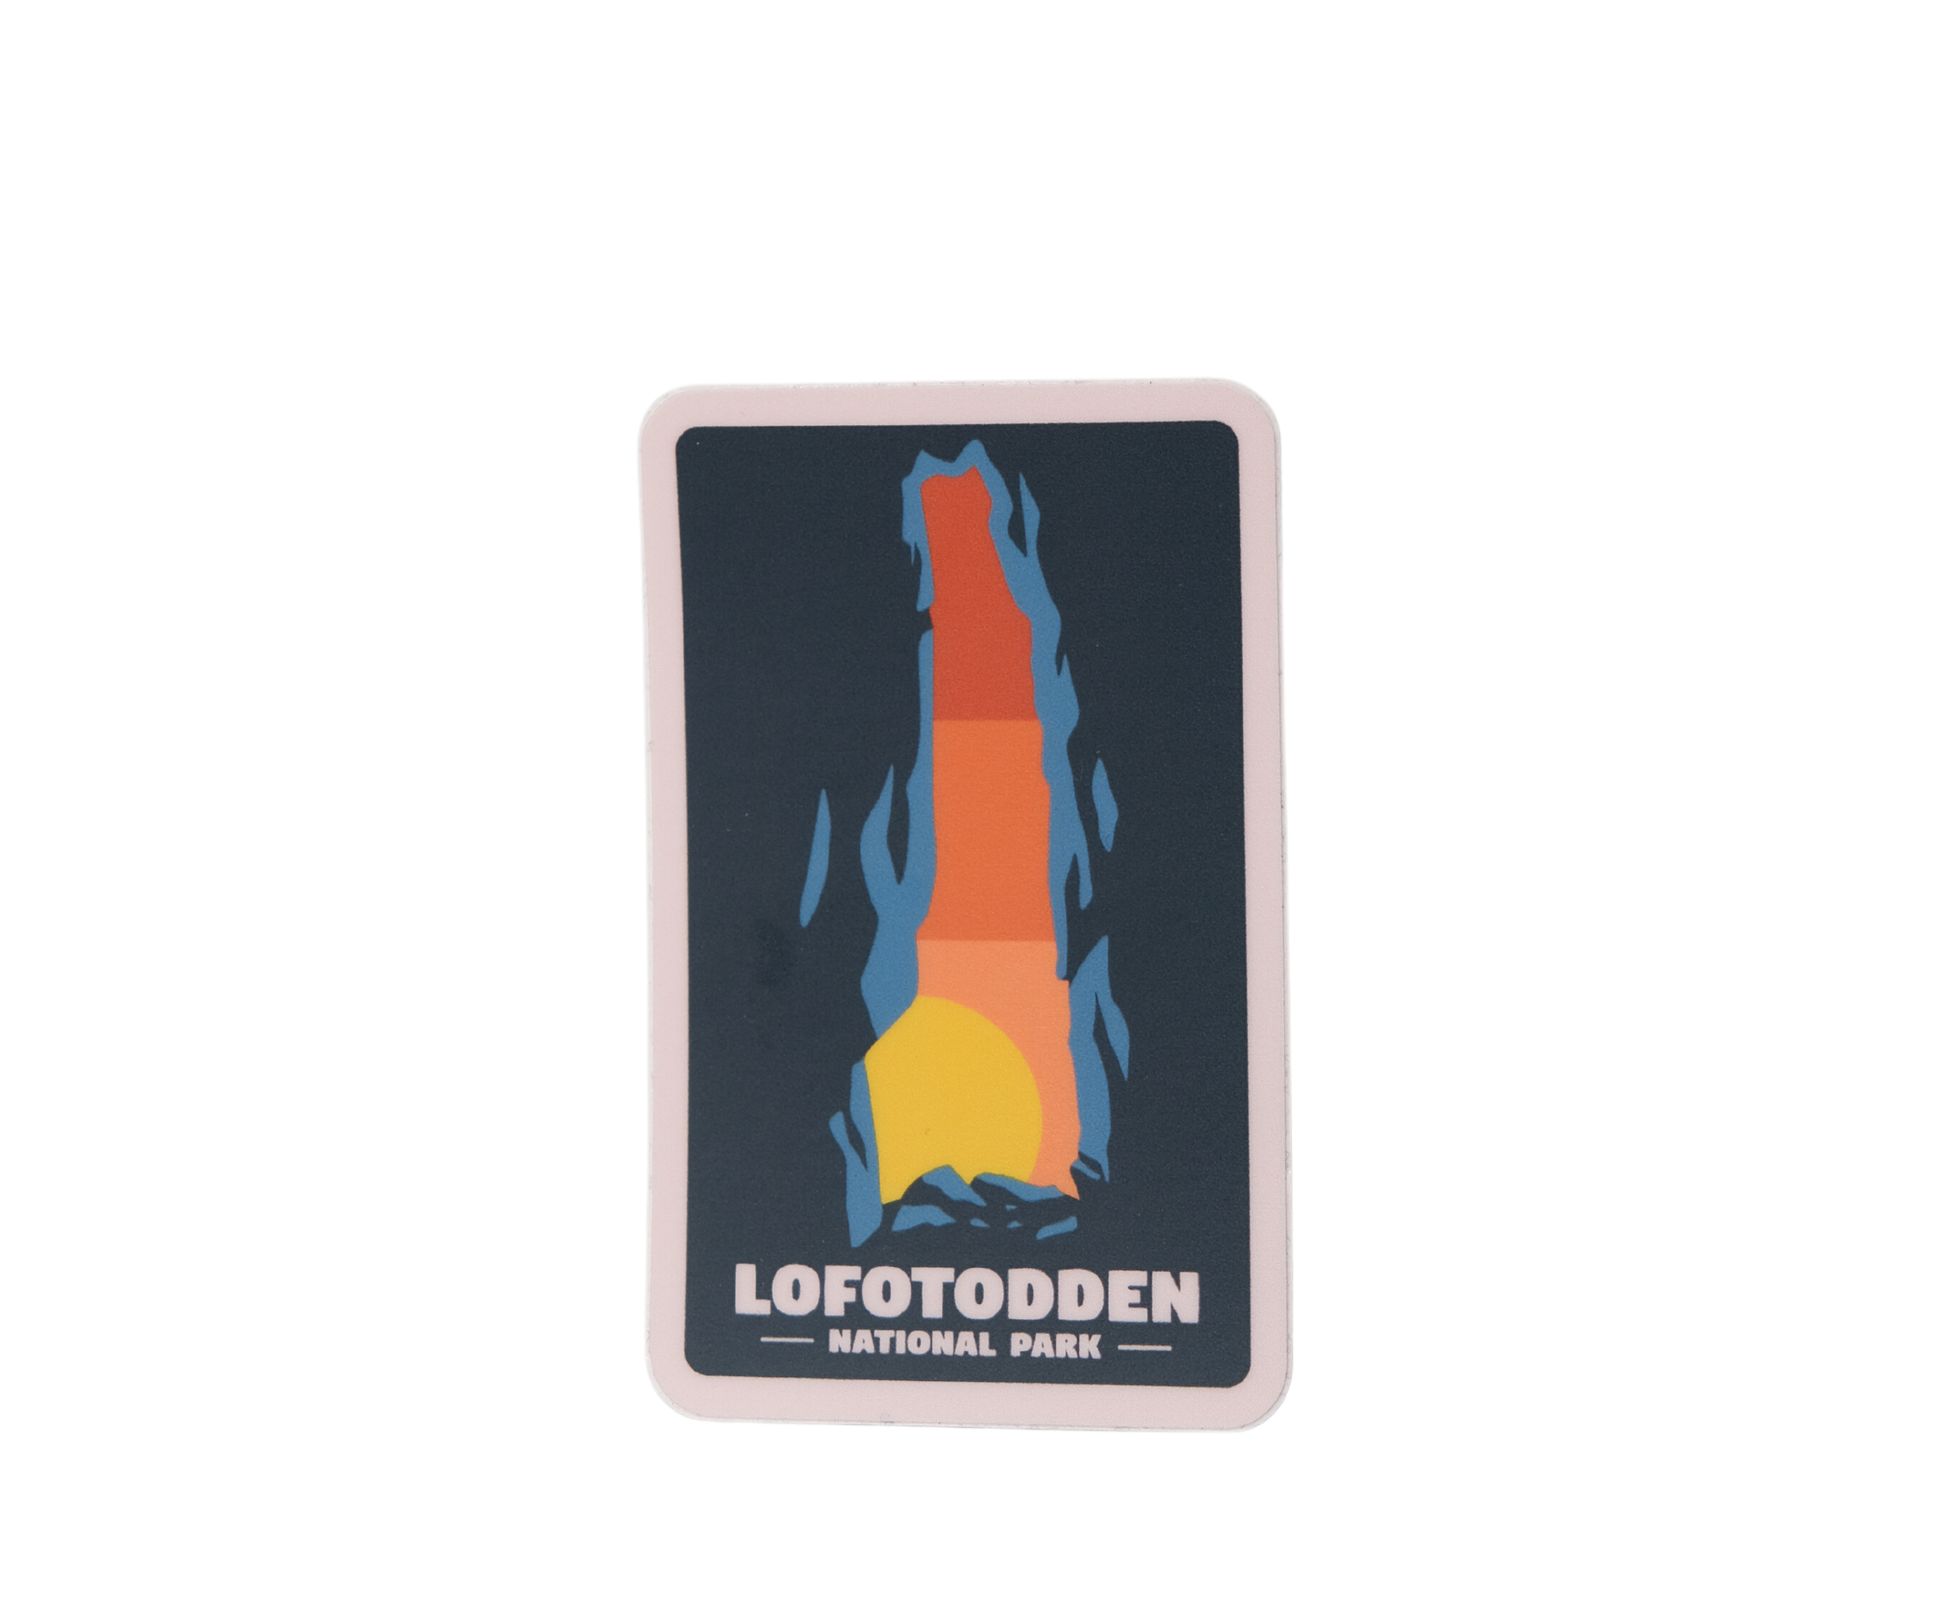 Lofoten sticker, Lofotodden National Park - Refsvika cave